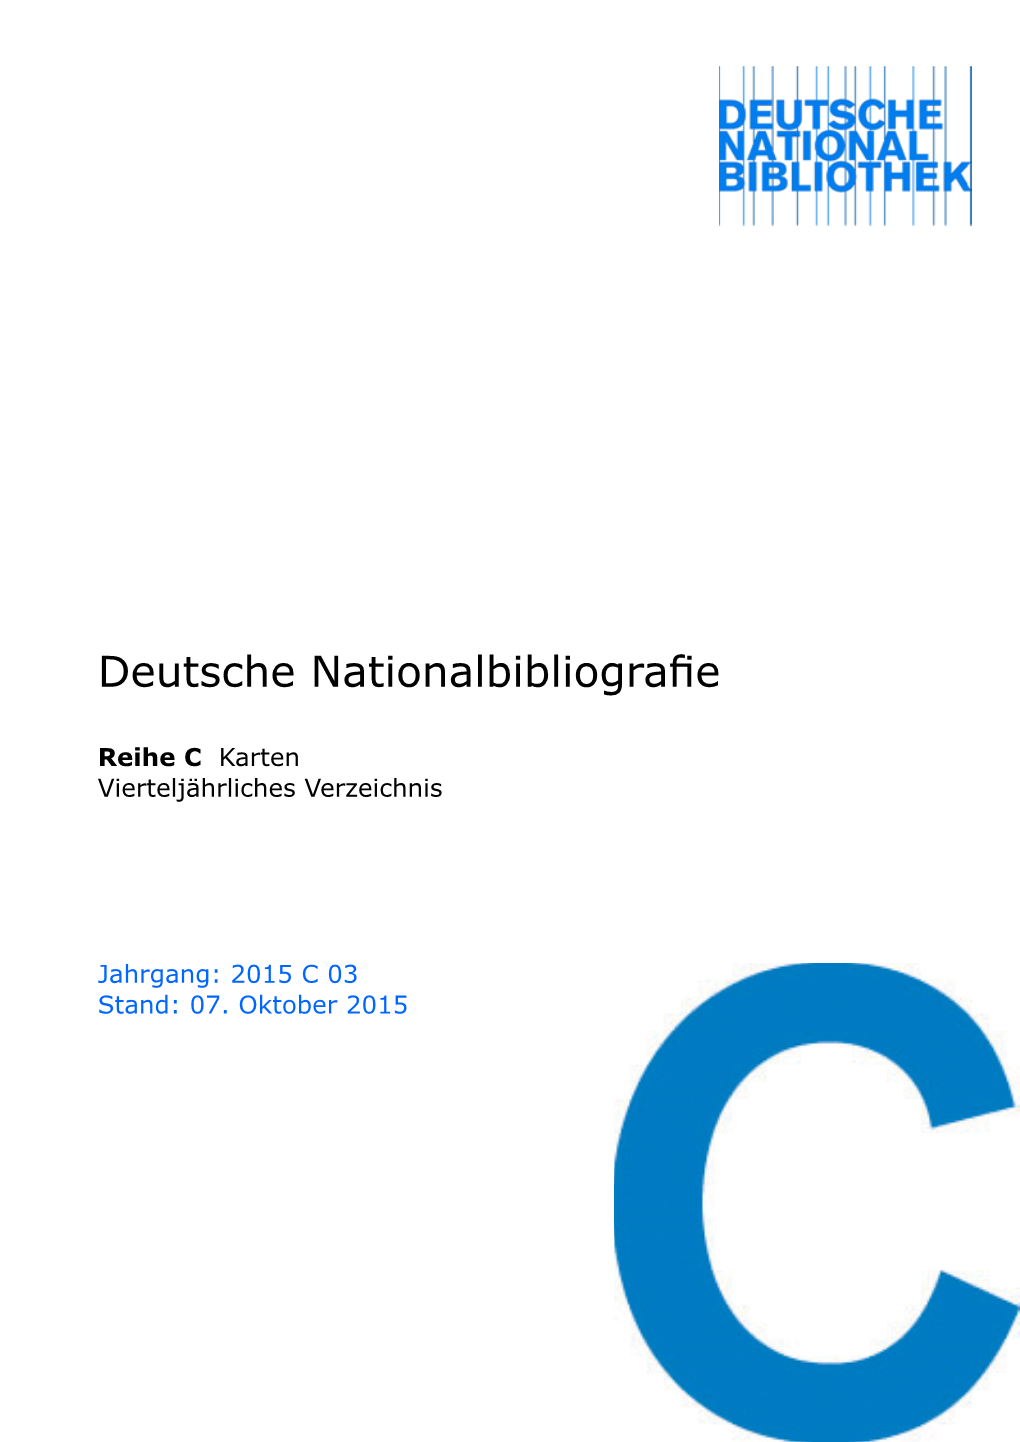 Deutsche Nationalbibliografie 2015 C 03